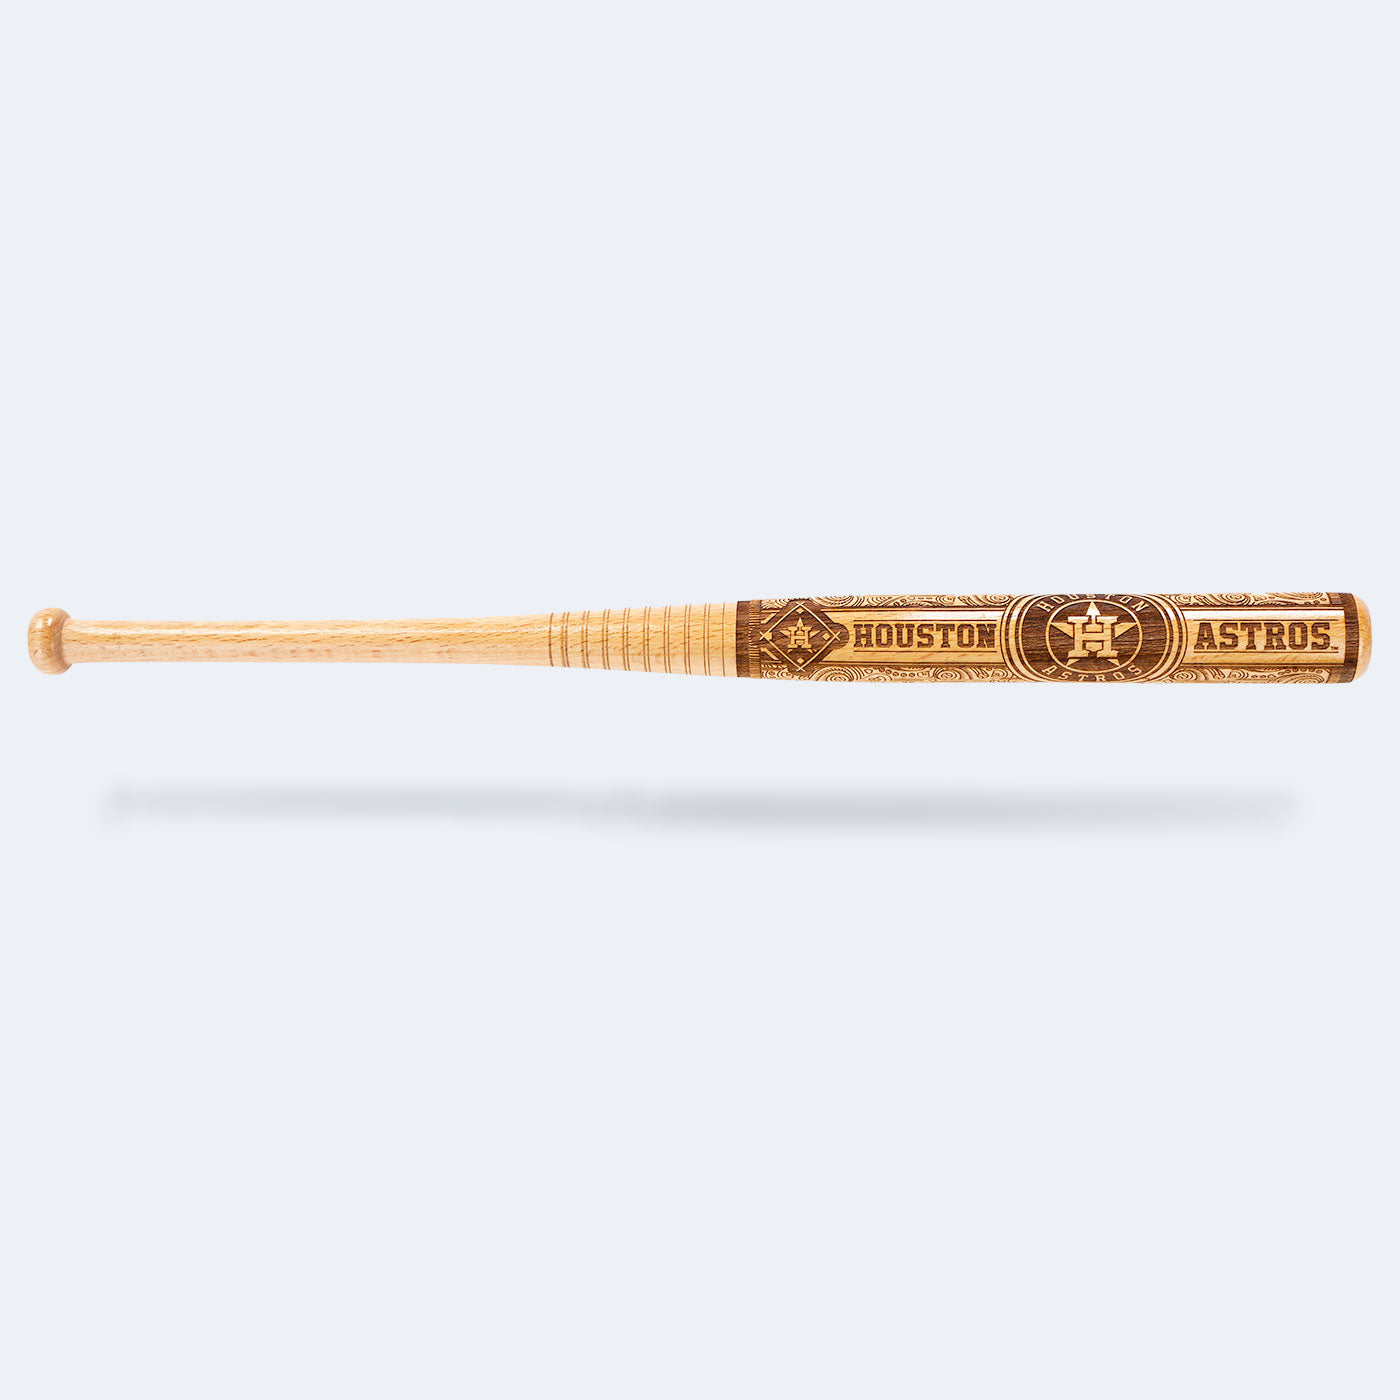 Houston Astros - Mini Wooden Souvenir Baseball Bat